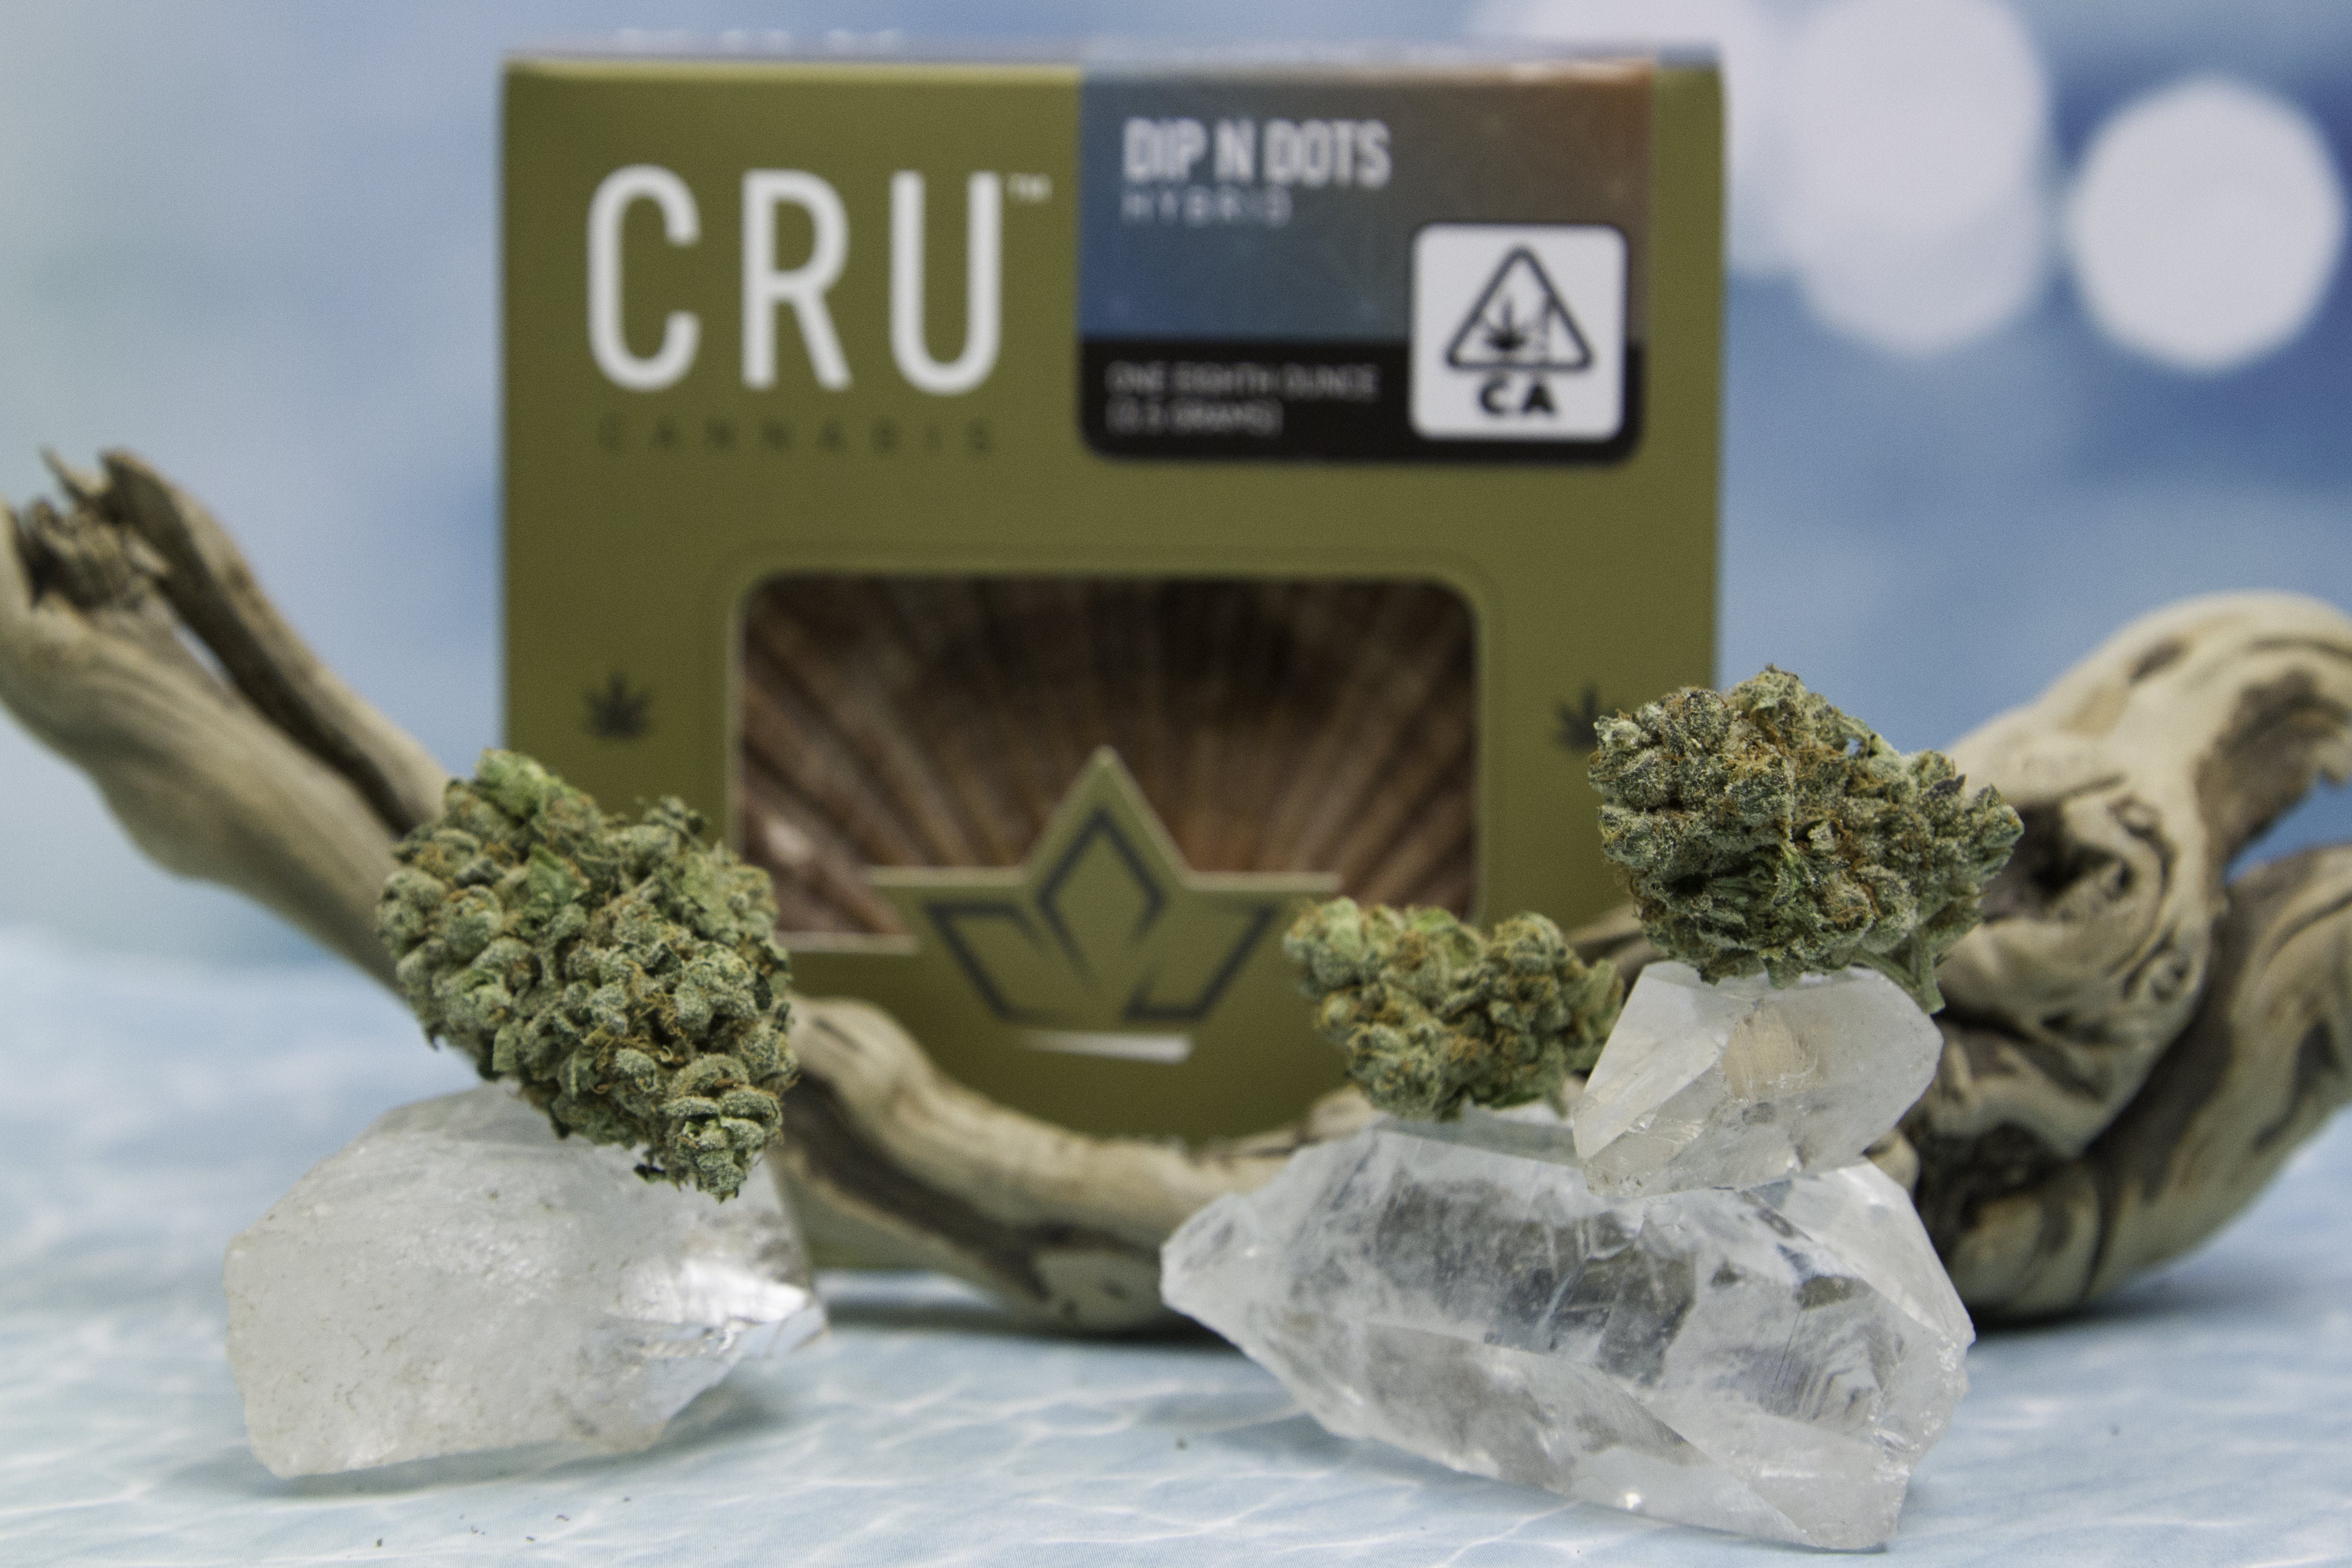 marijuana-dispensaries-22775-pacific-coast-highway-malibu-dip-n-dots-by-cru-cannabis-co